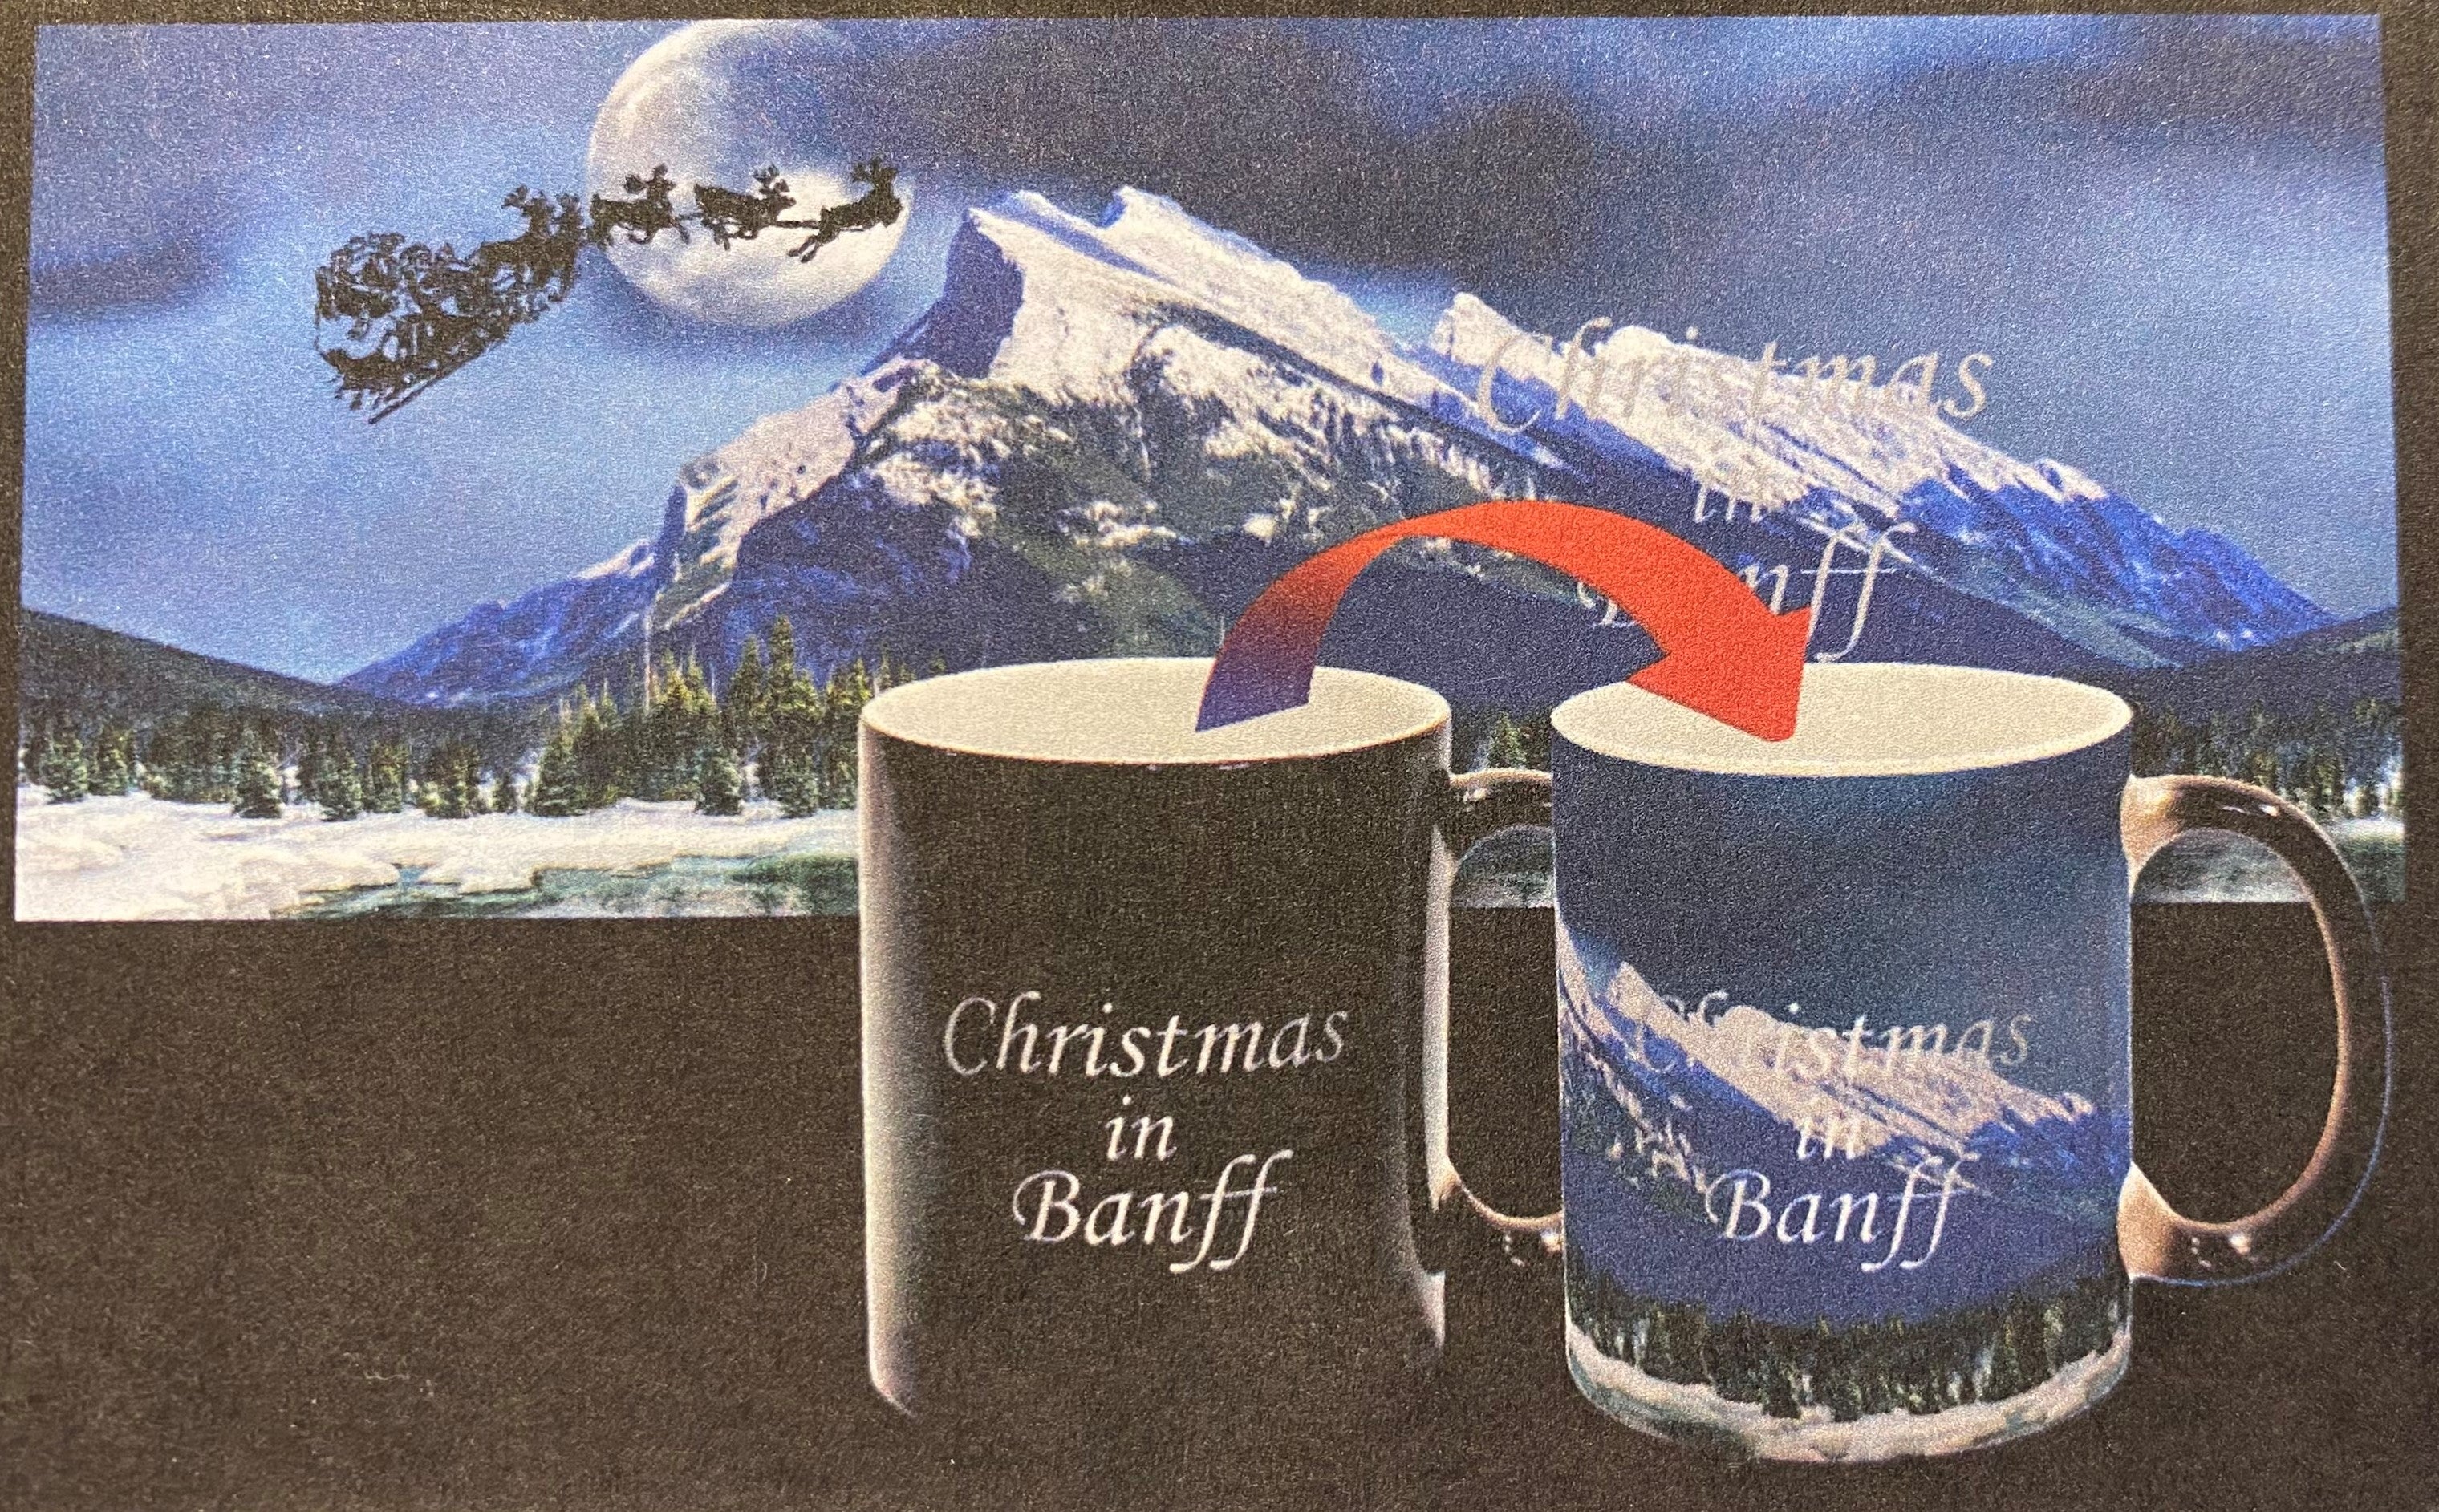 Christmas in Banff Color Changing Mug